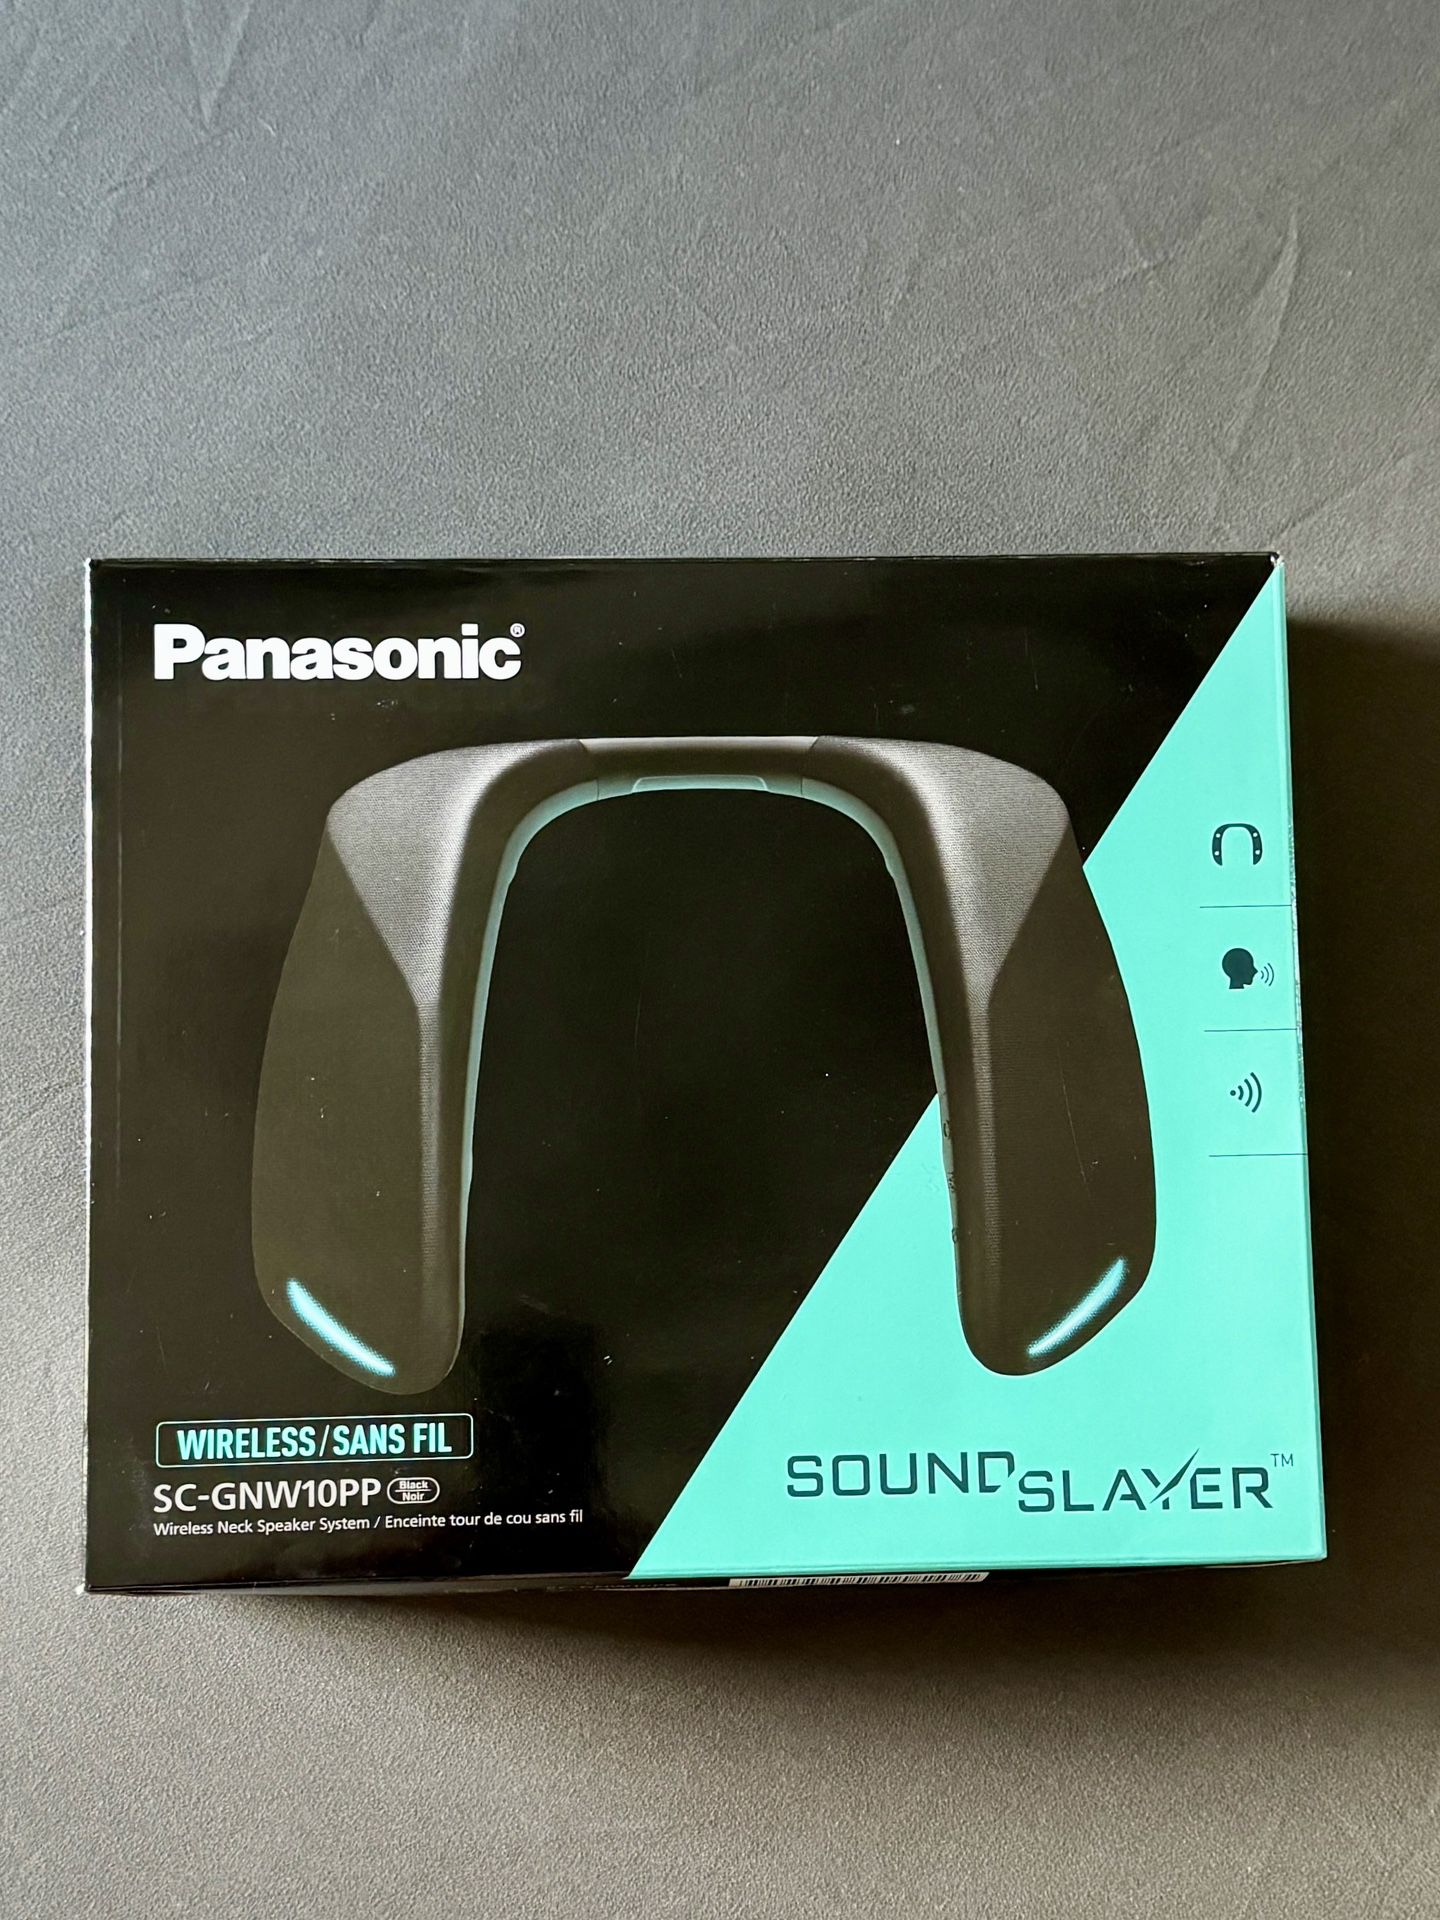 Panasonic Sound Slayer